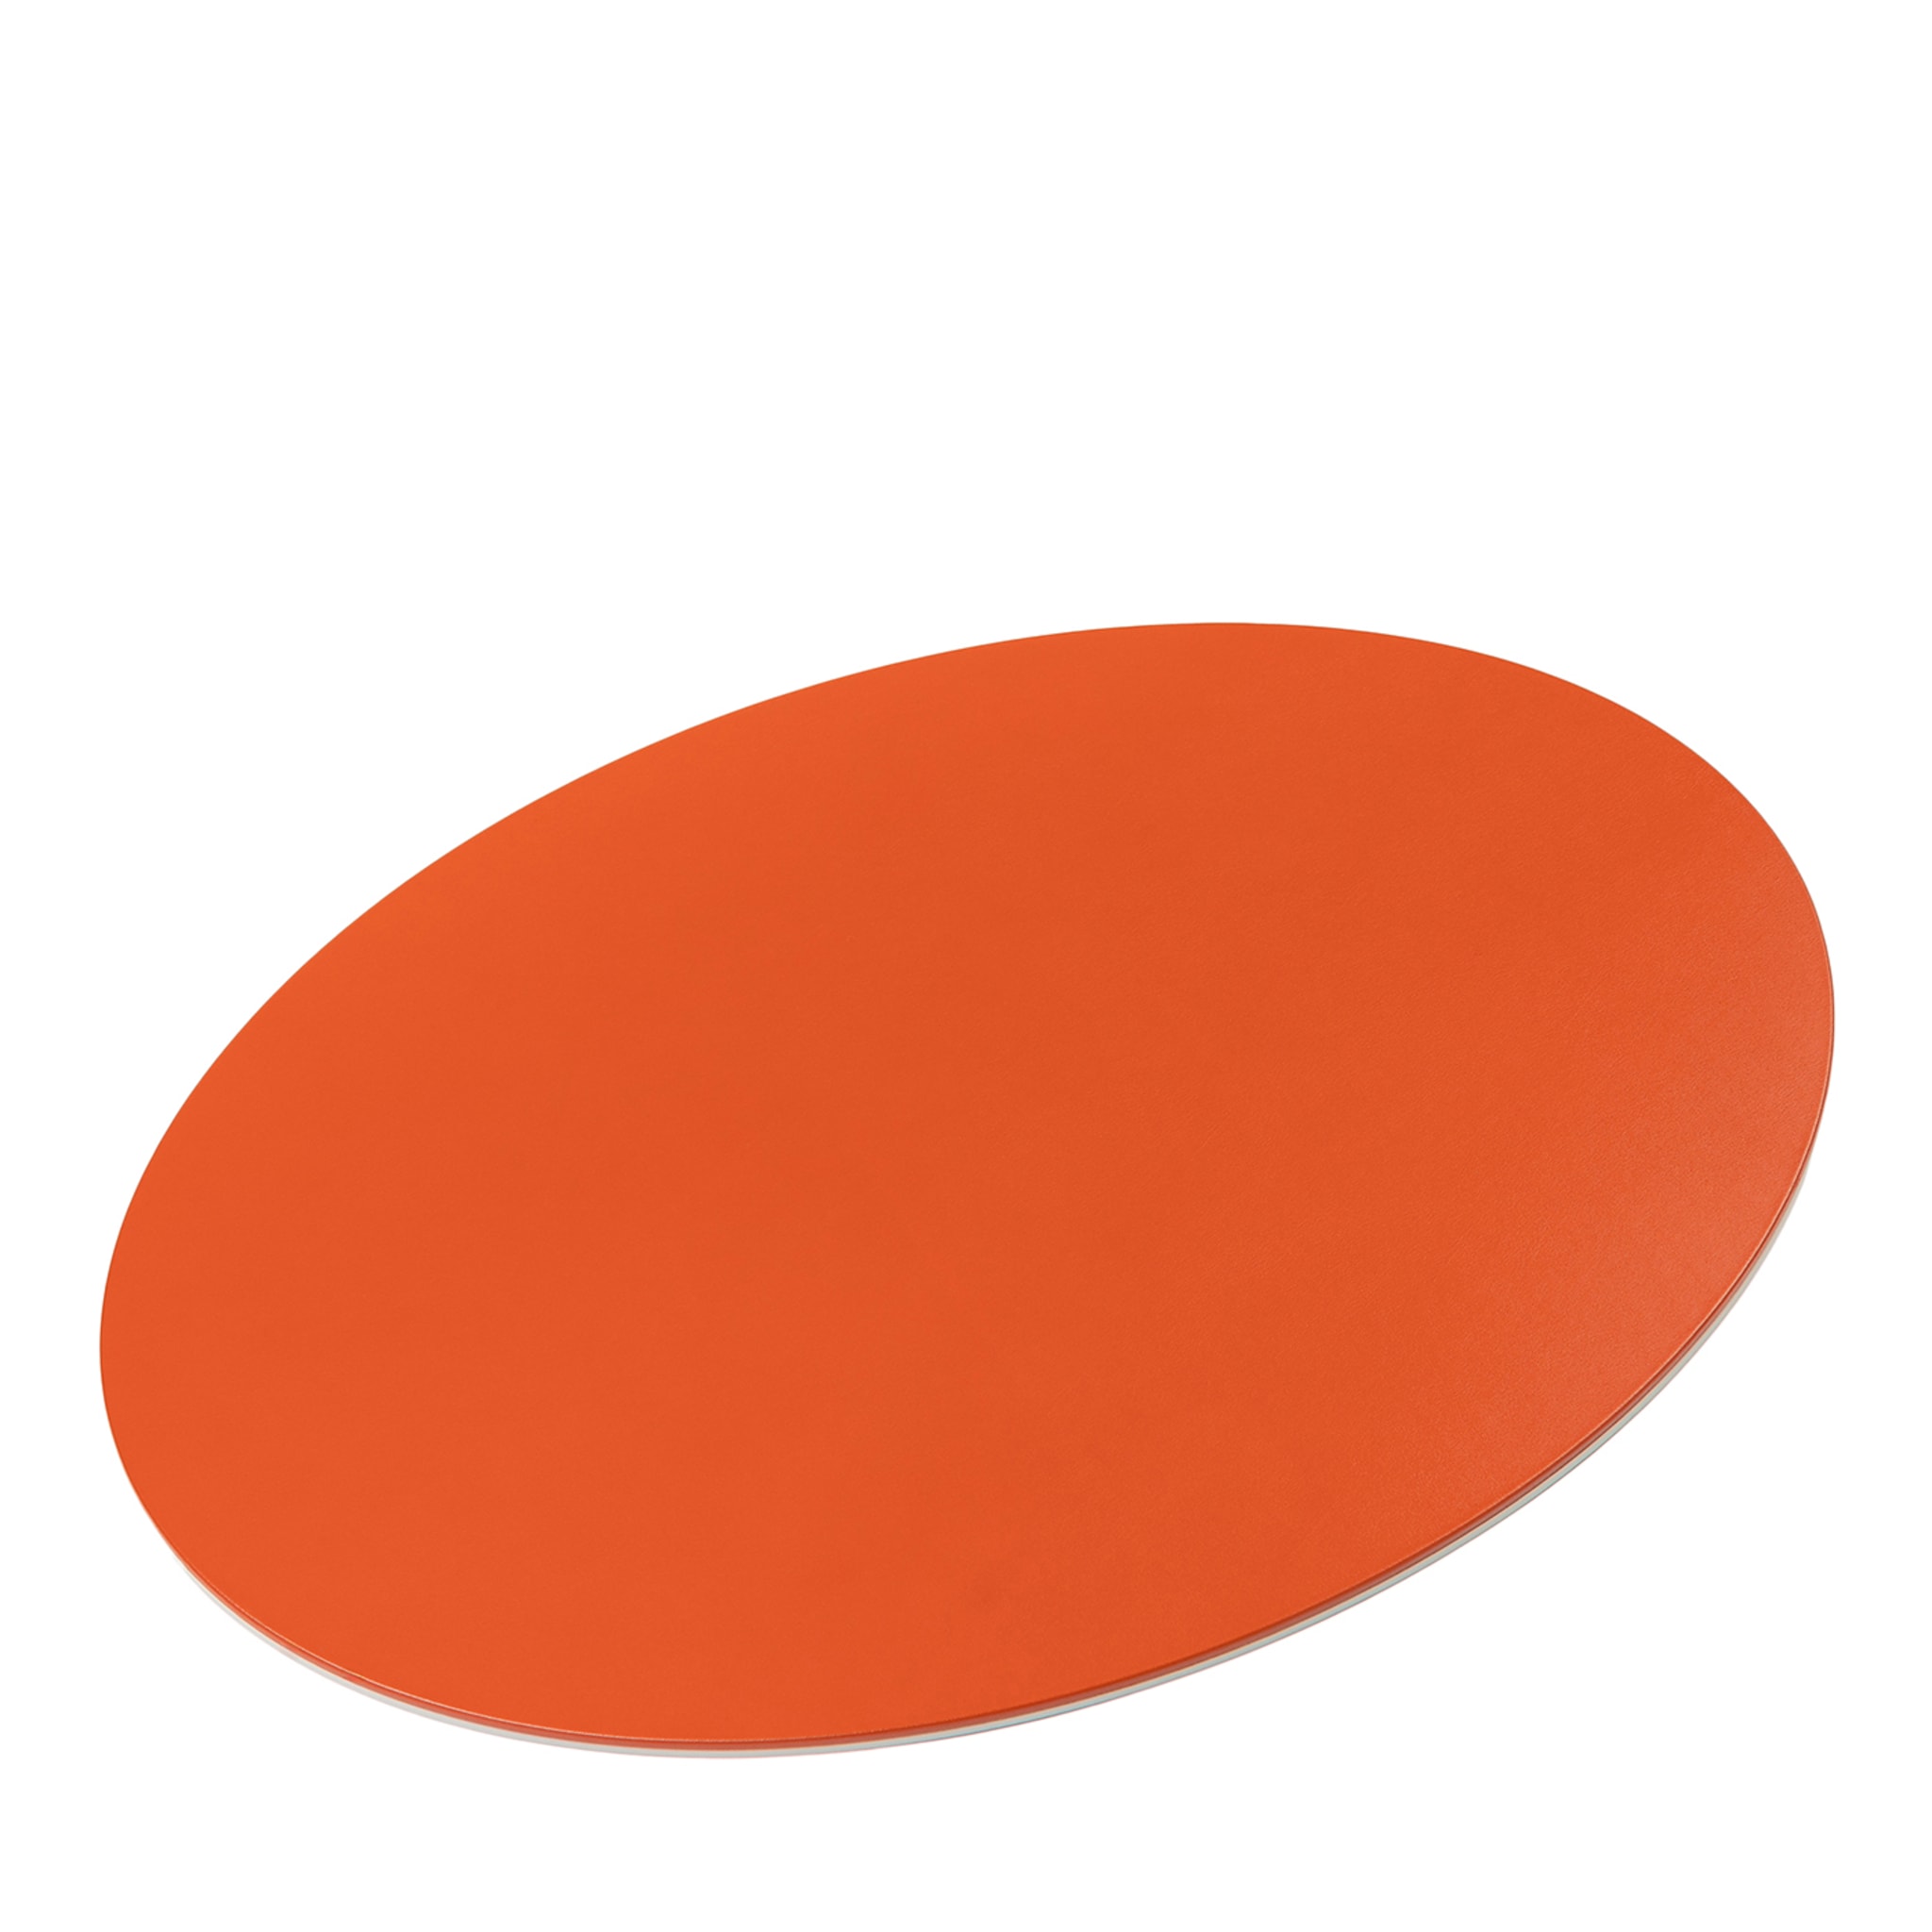 Mondrian Spritz Orange and Luna White Oval Placemat - Main view